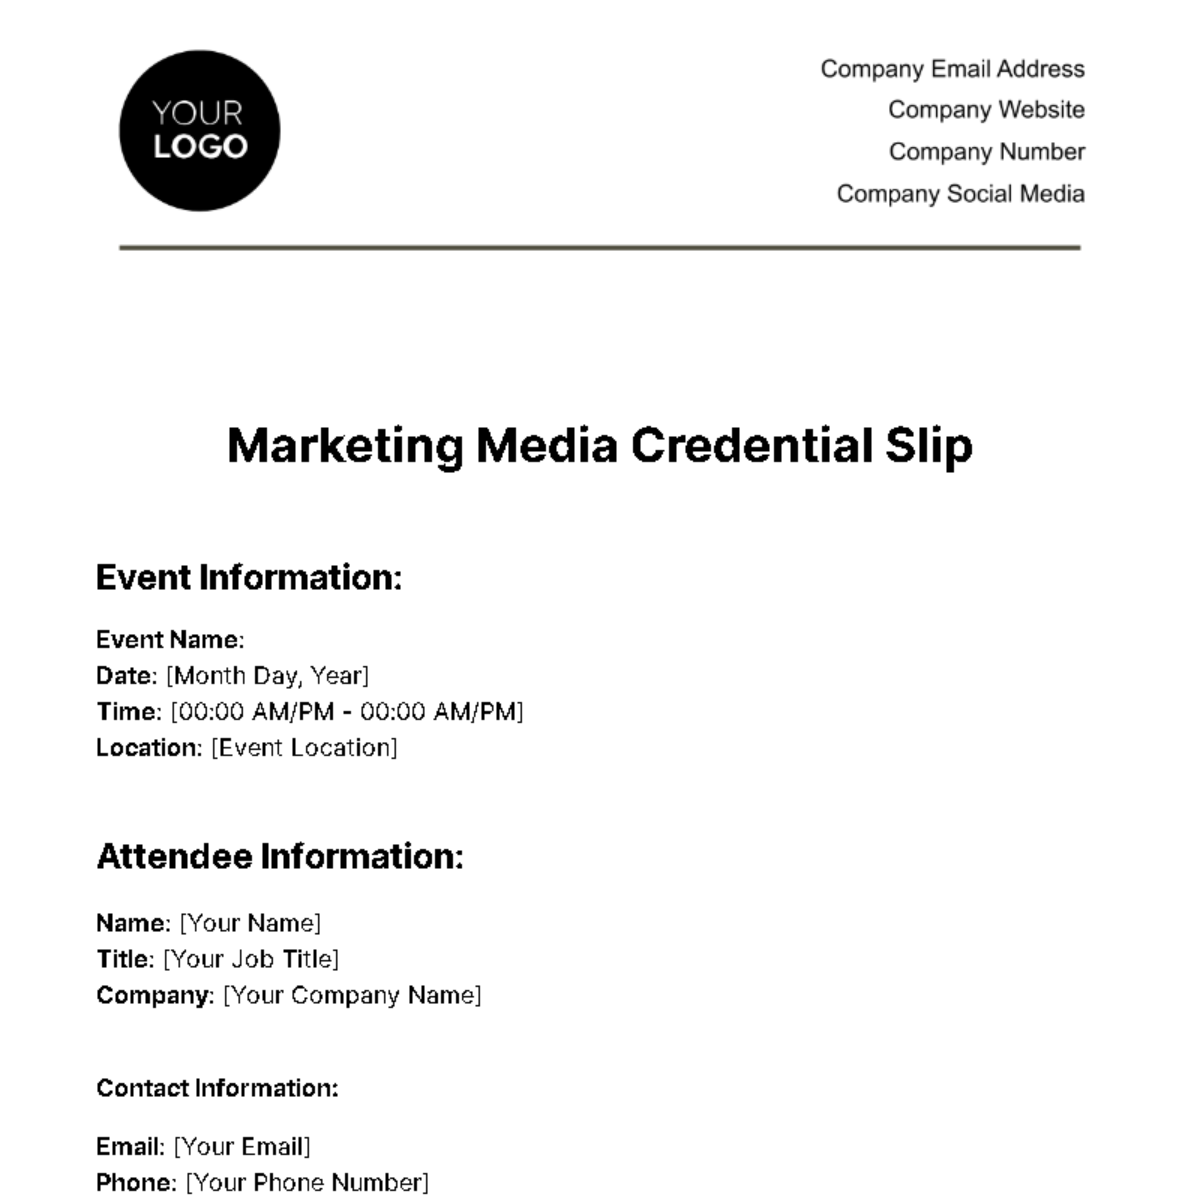 Marketing Media Credential Slip Template